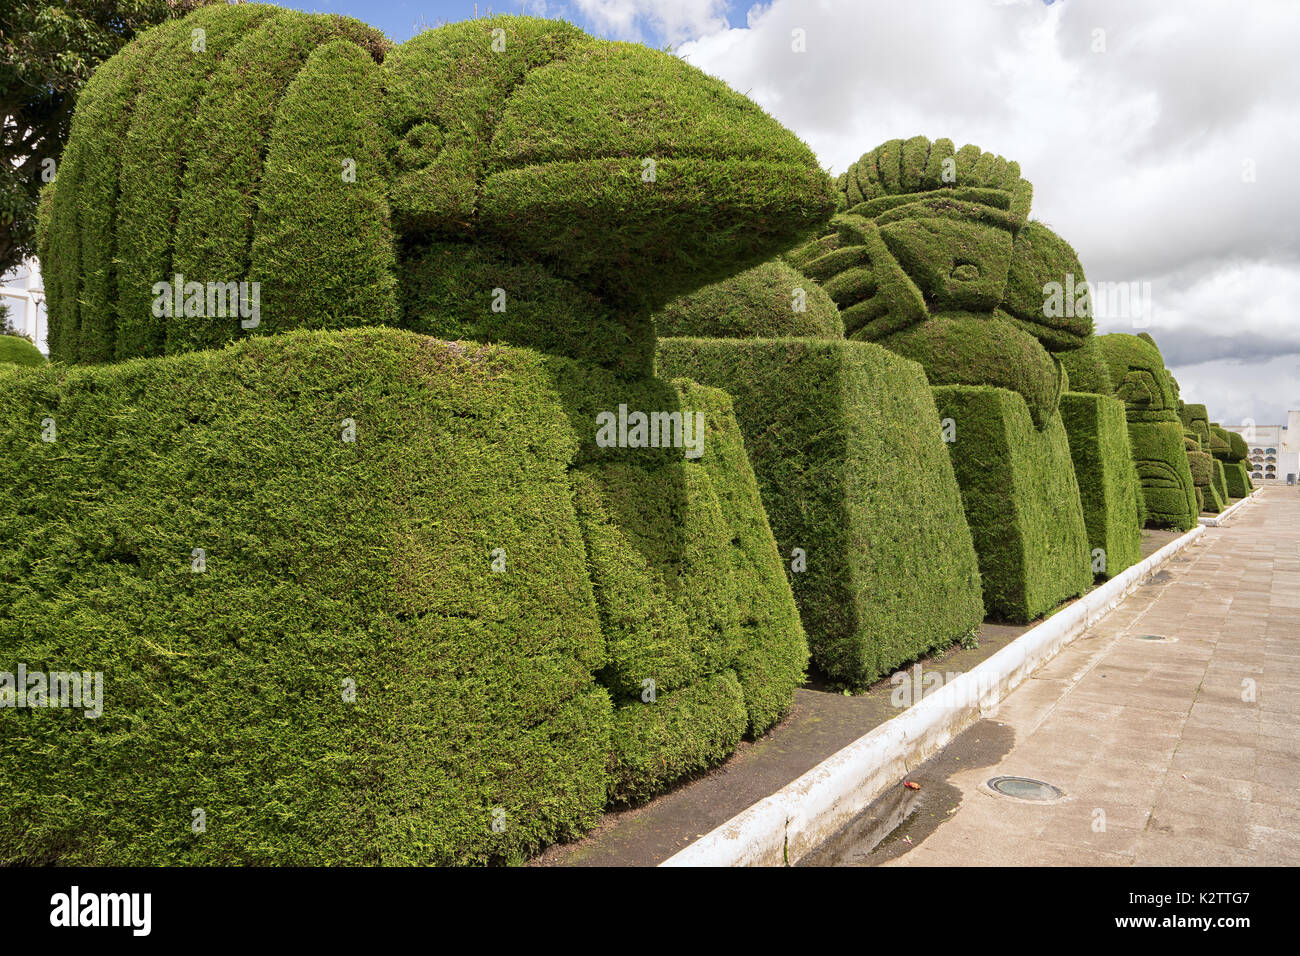 Evergreen cypress topiary en el cementerio de Tulcán Ecuador un destino turístico popular. Foto de stock